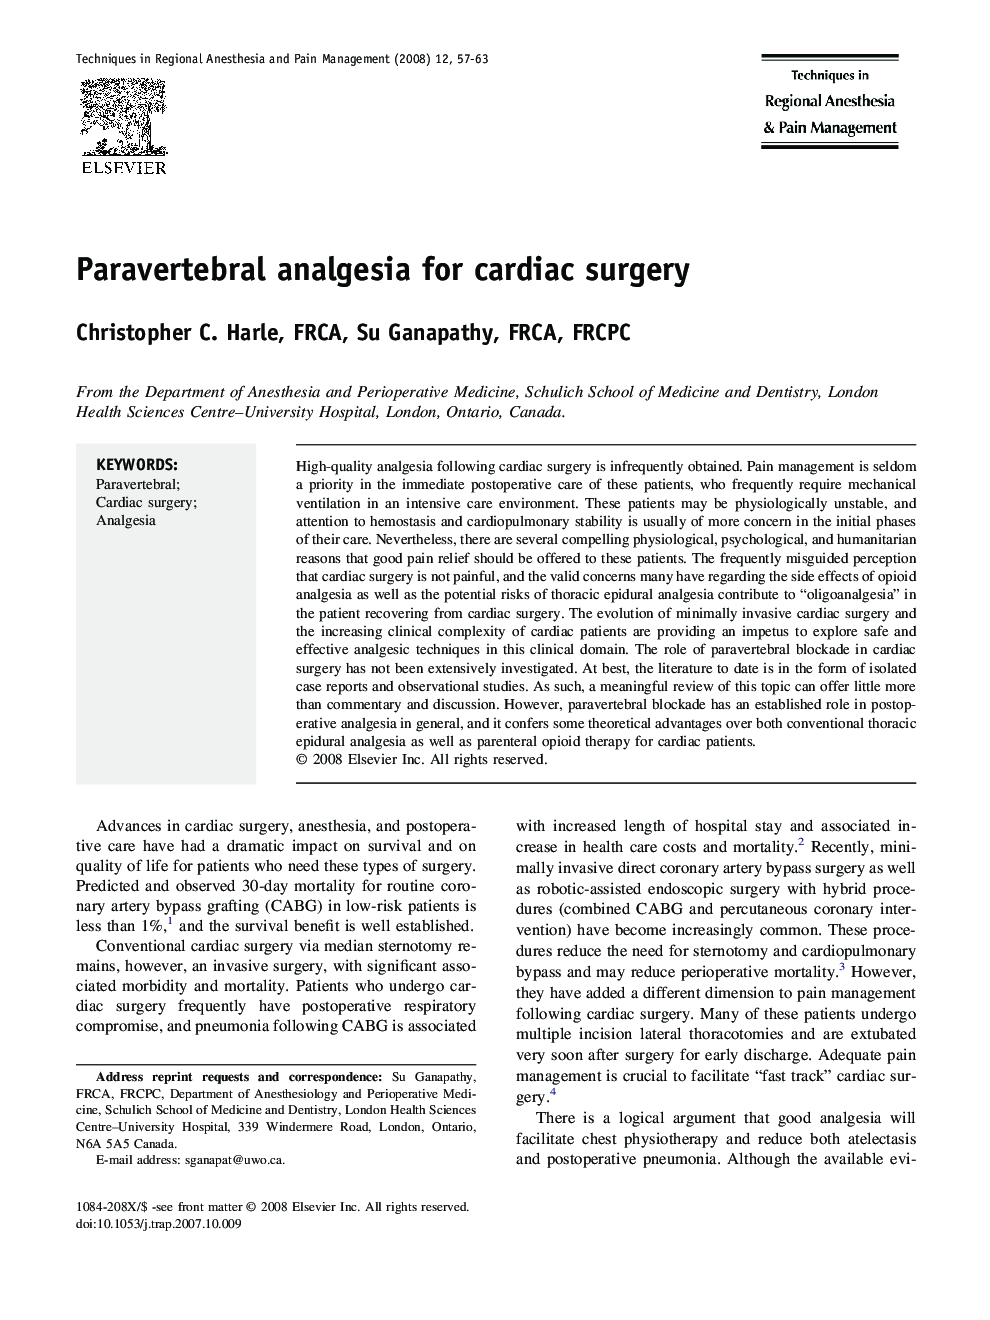 Paravertebral analgesia for cardiac surgery